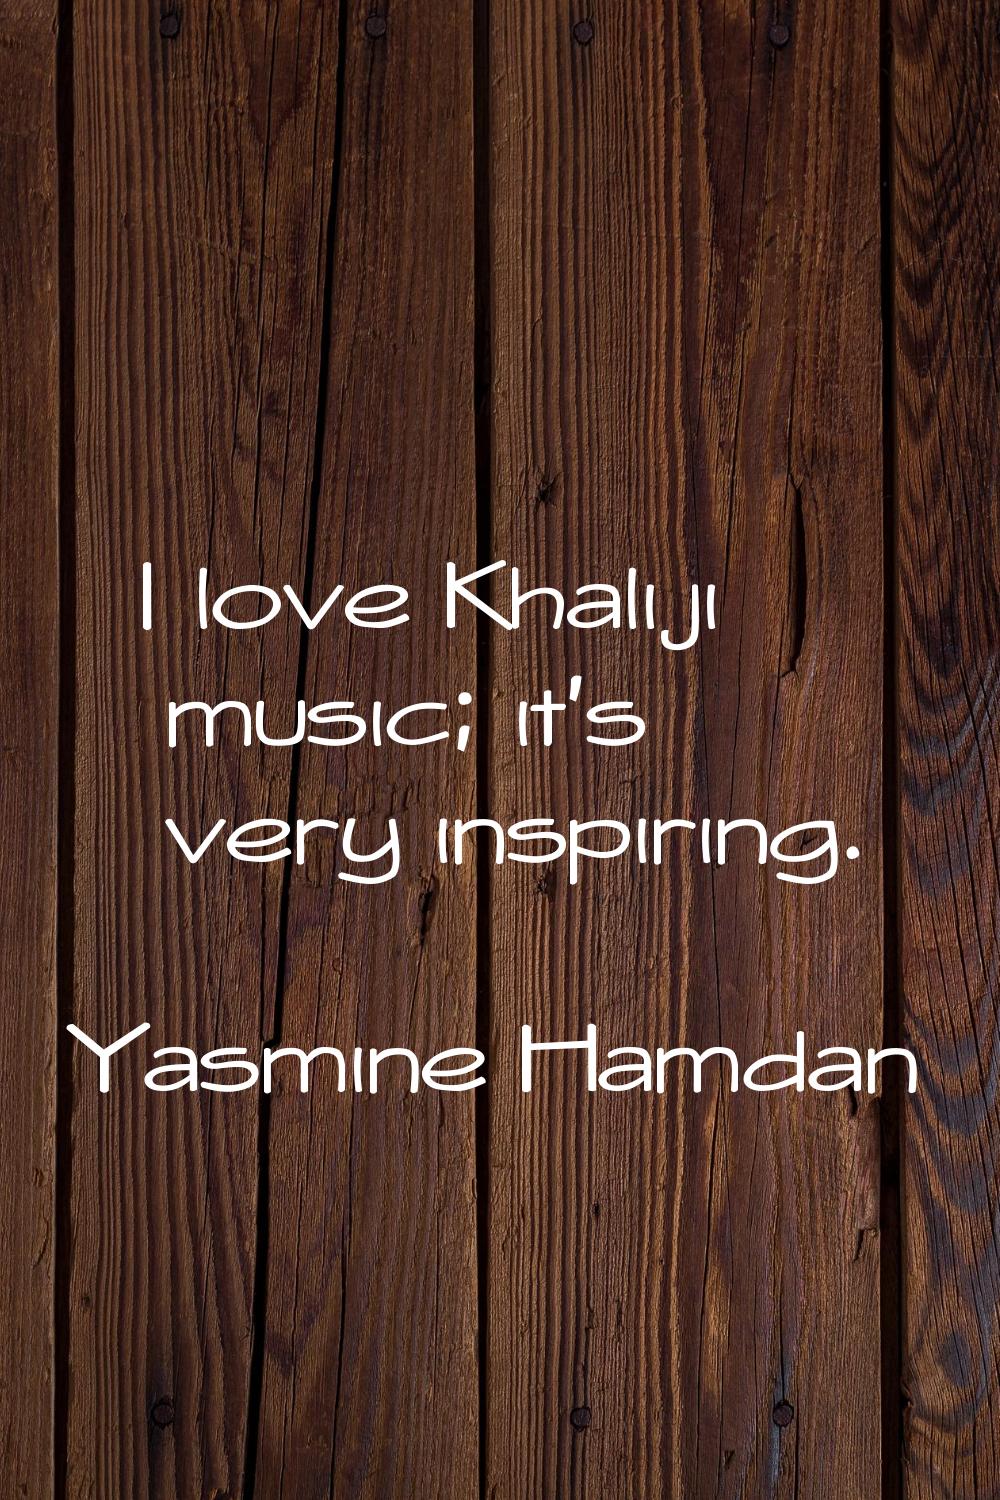 I love Khaliji music; it's very inspiring.